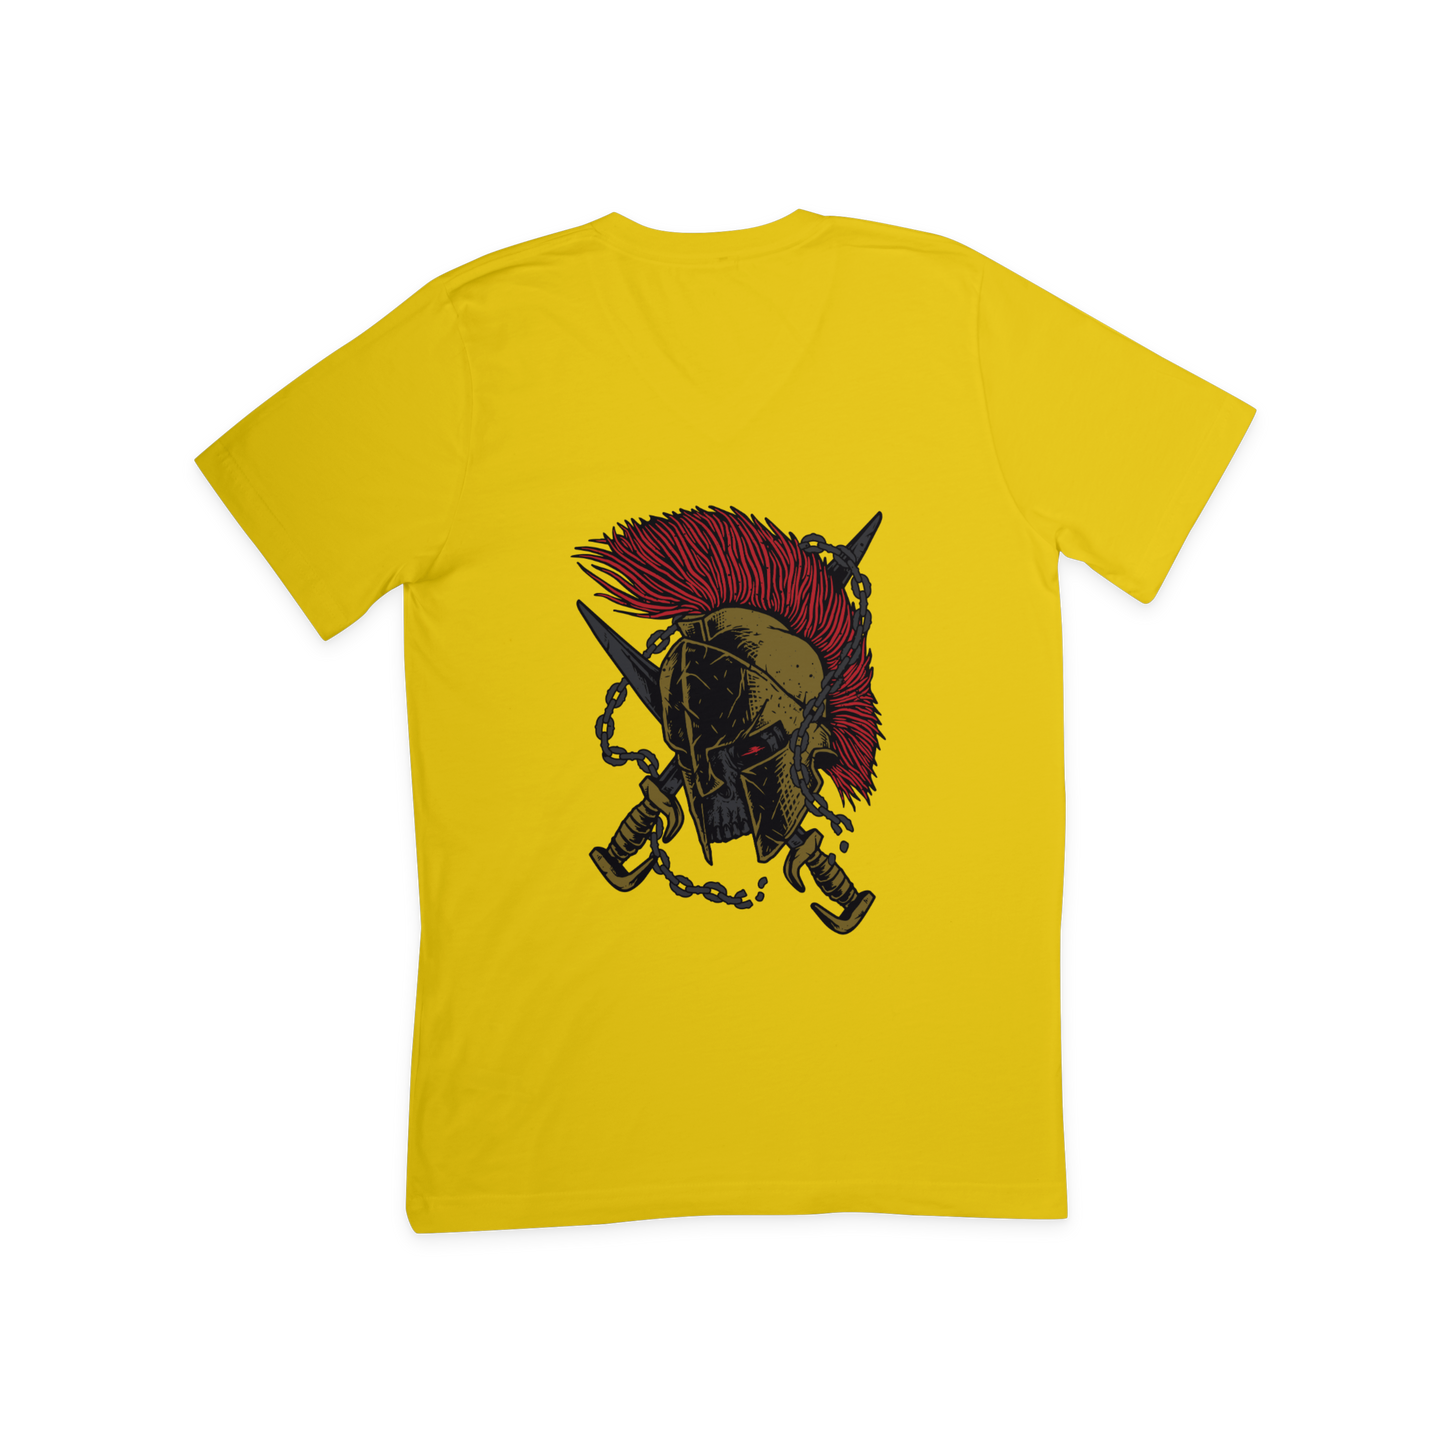 thrown Design T shirt